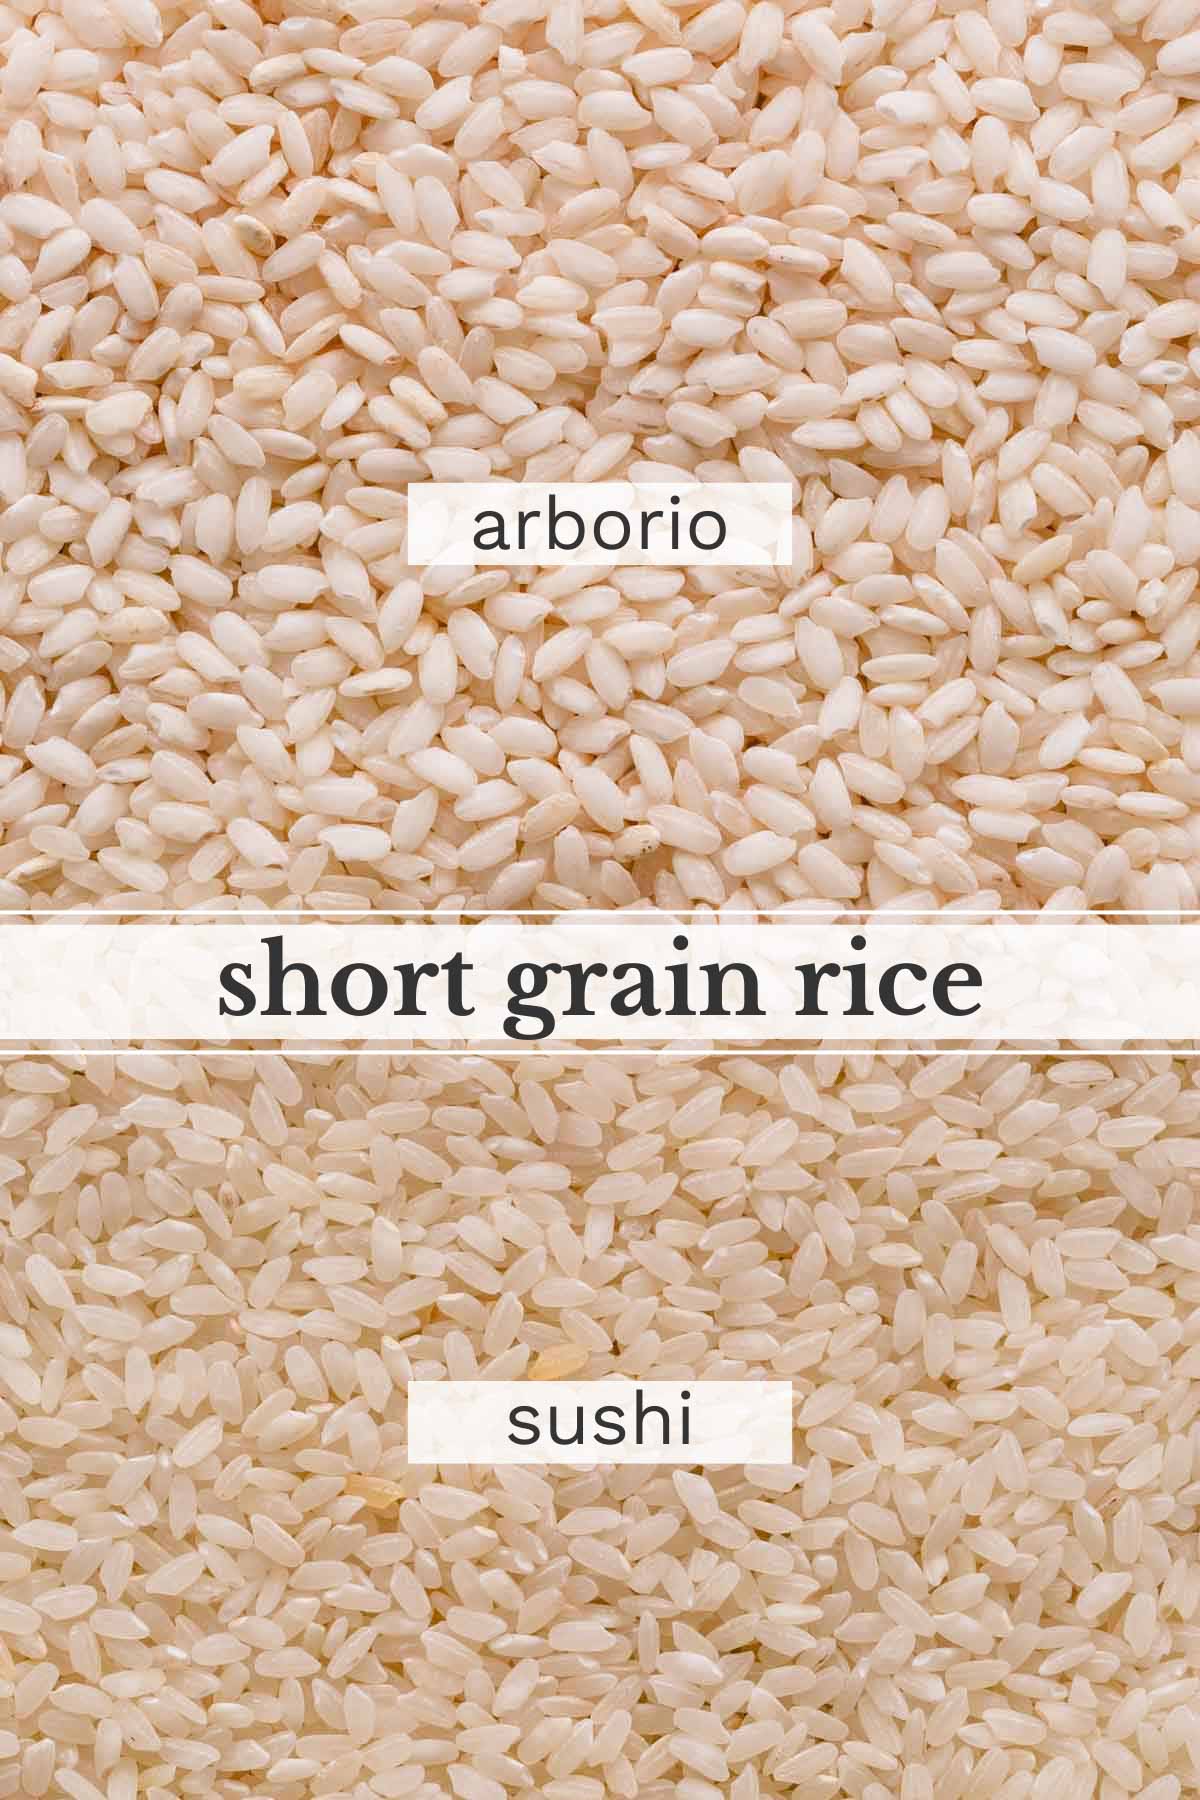 2 types of short grain-rice: arborio and sushi.